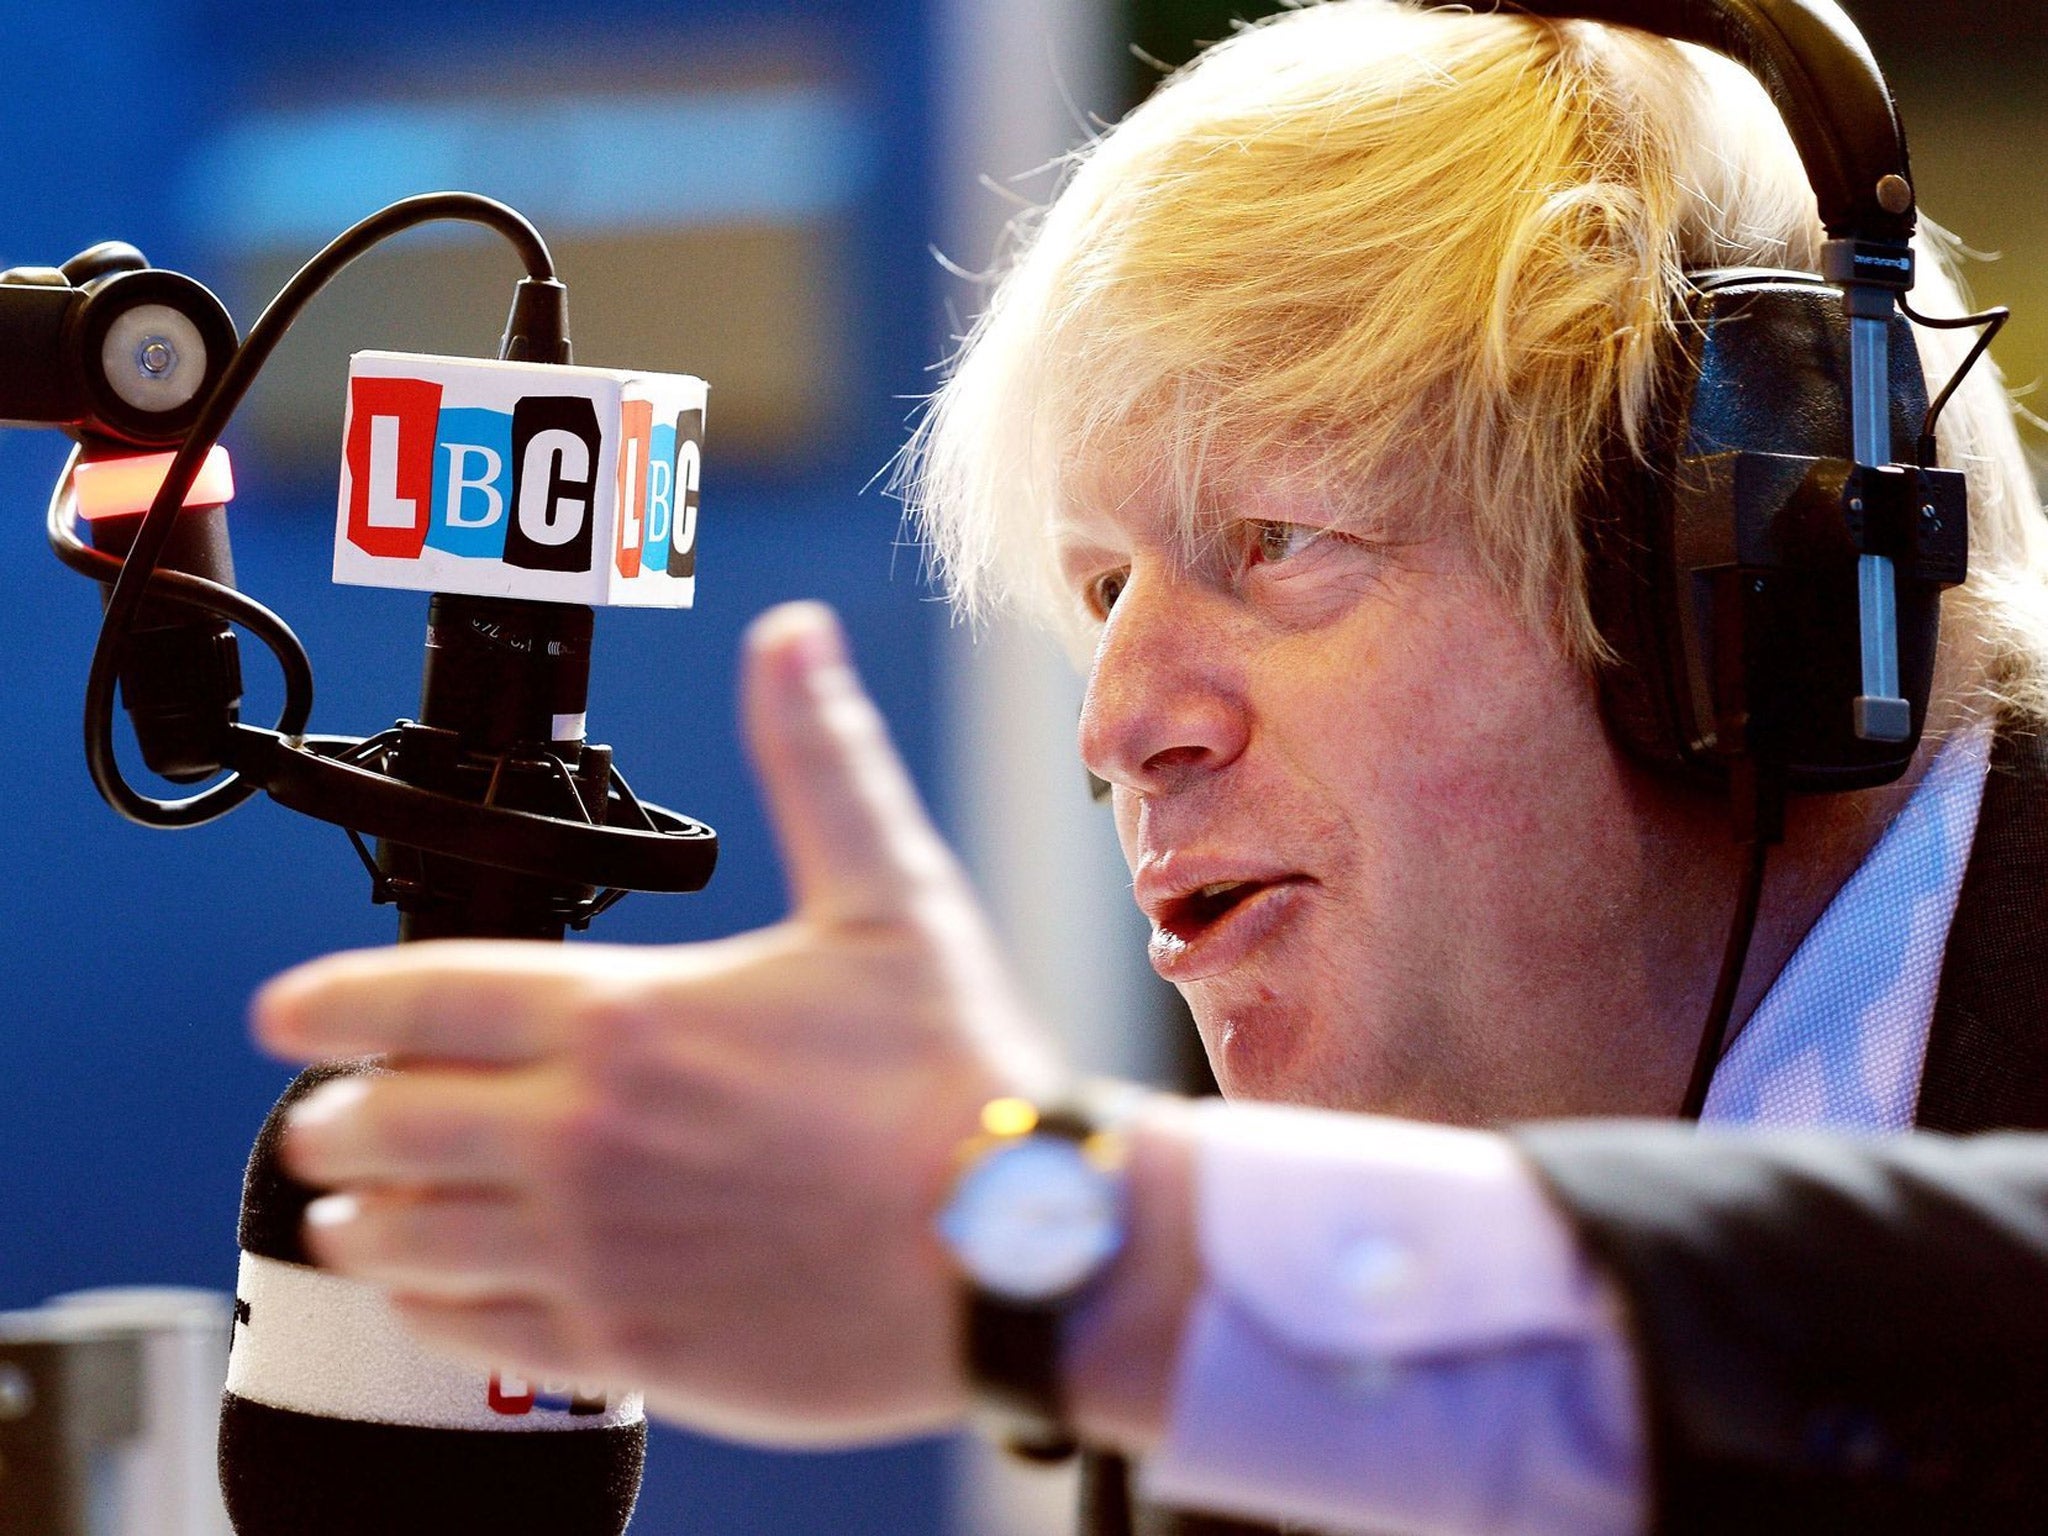 Mayor of London Boris Johnson expresses his views on LBC